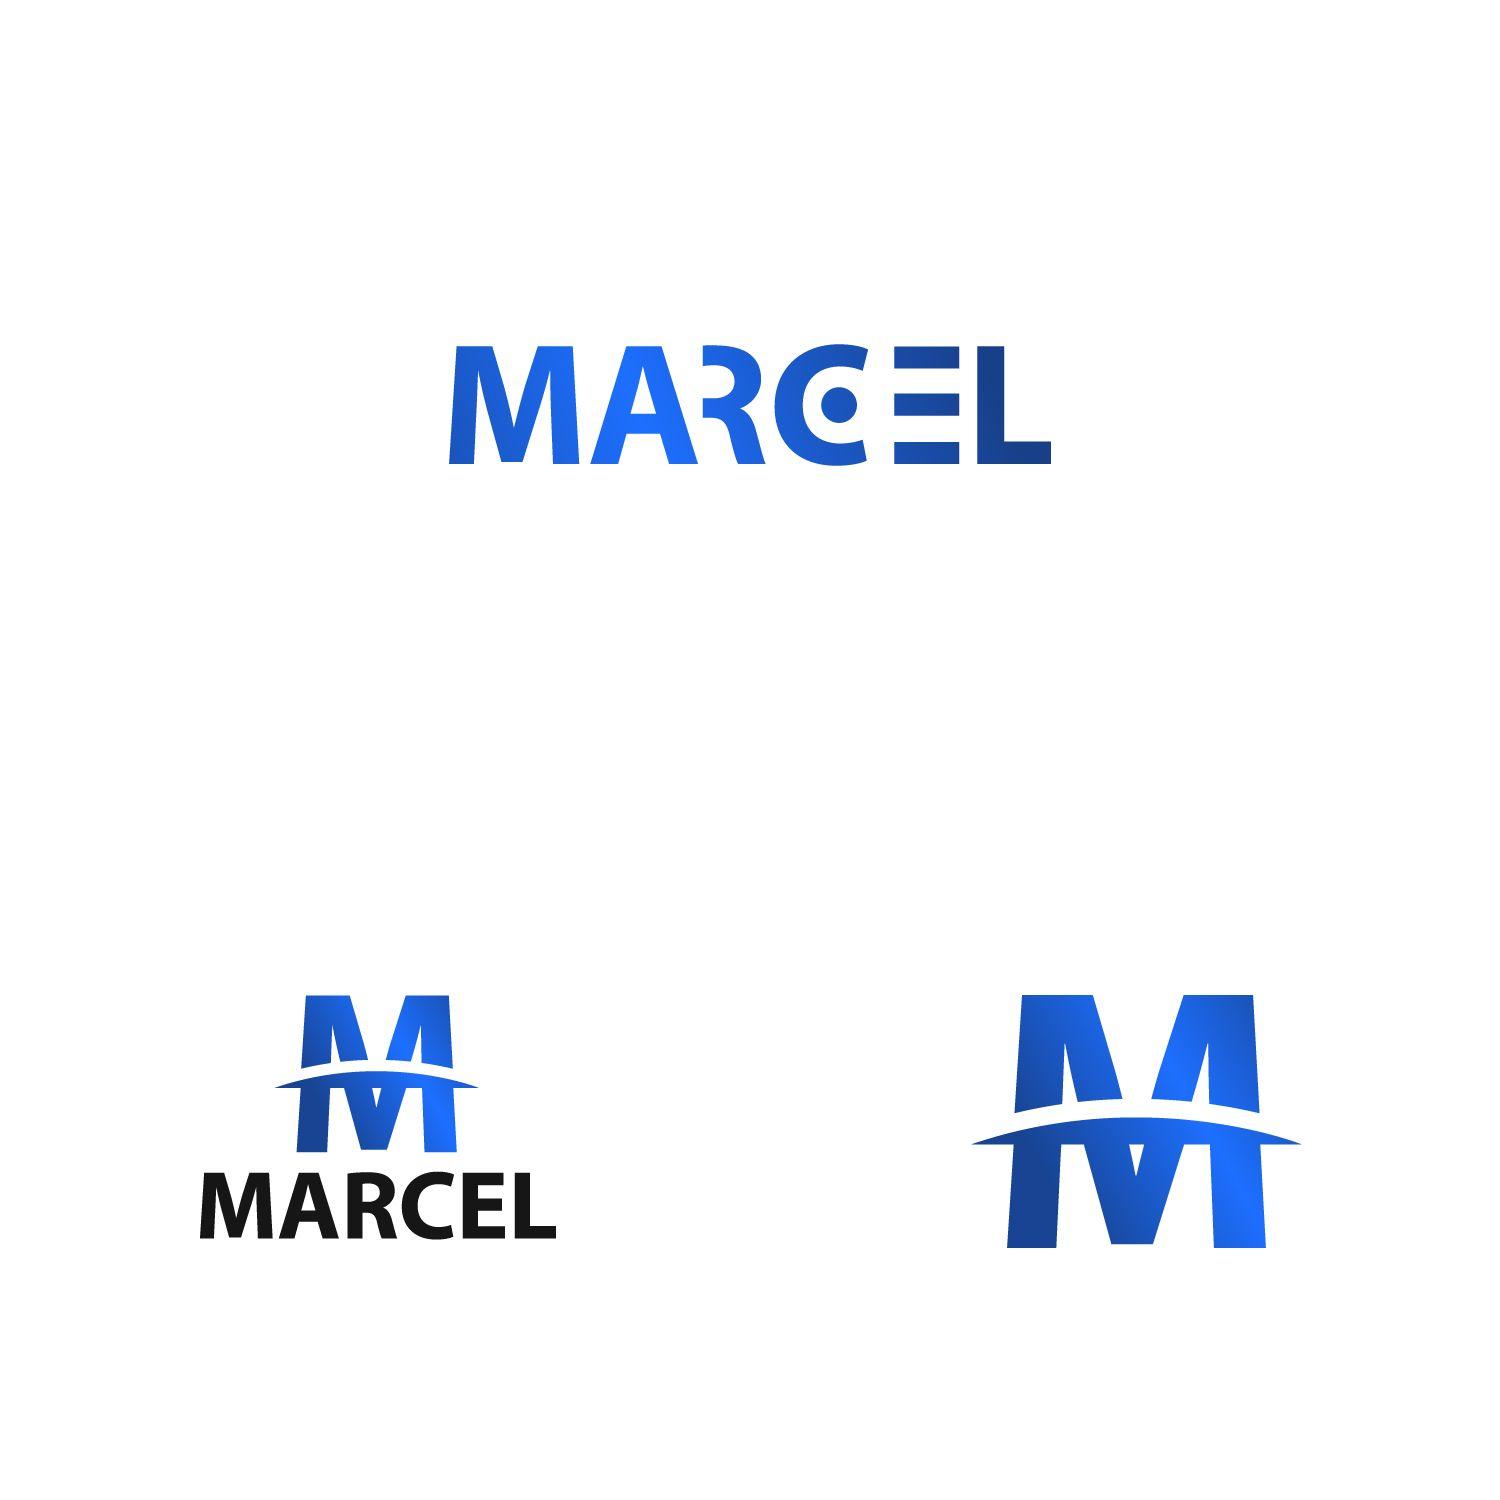 Marcel Logo - Logo Design for Marcel by Iwang Vibi F | Design #21135148